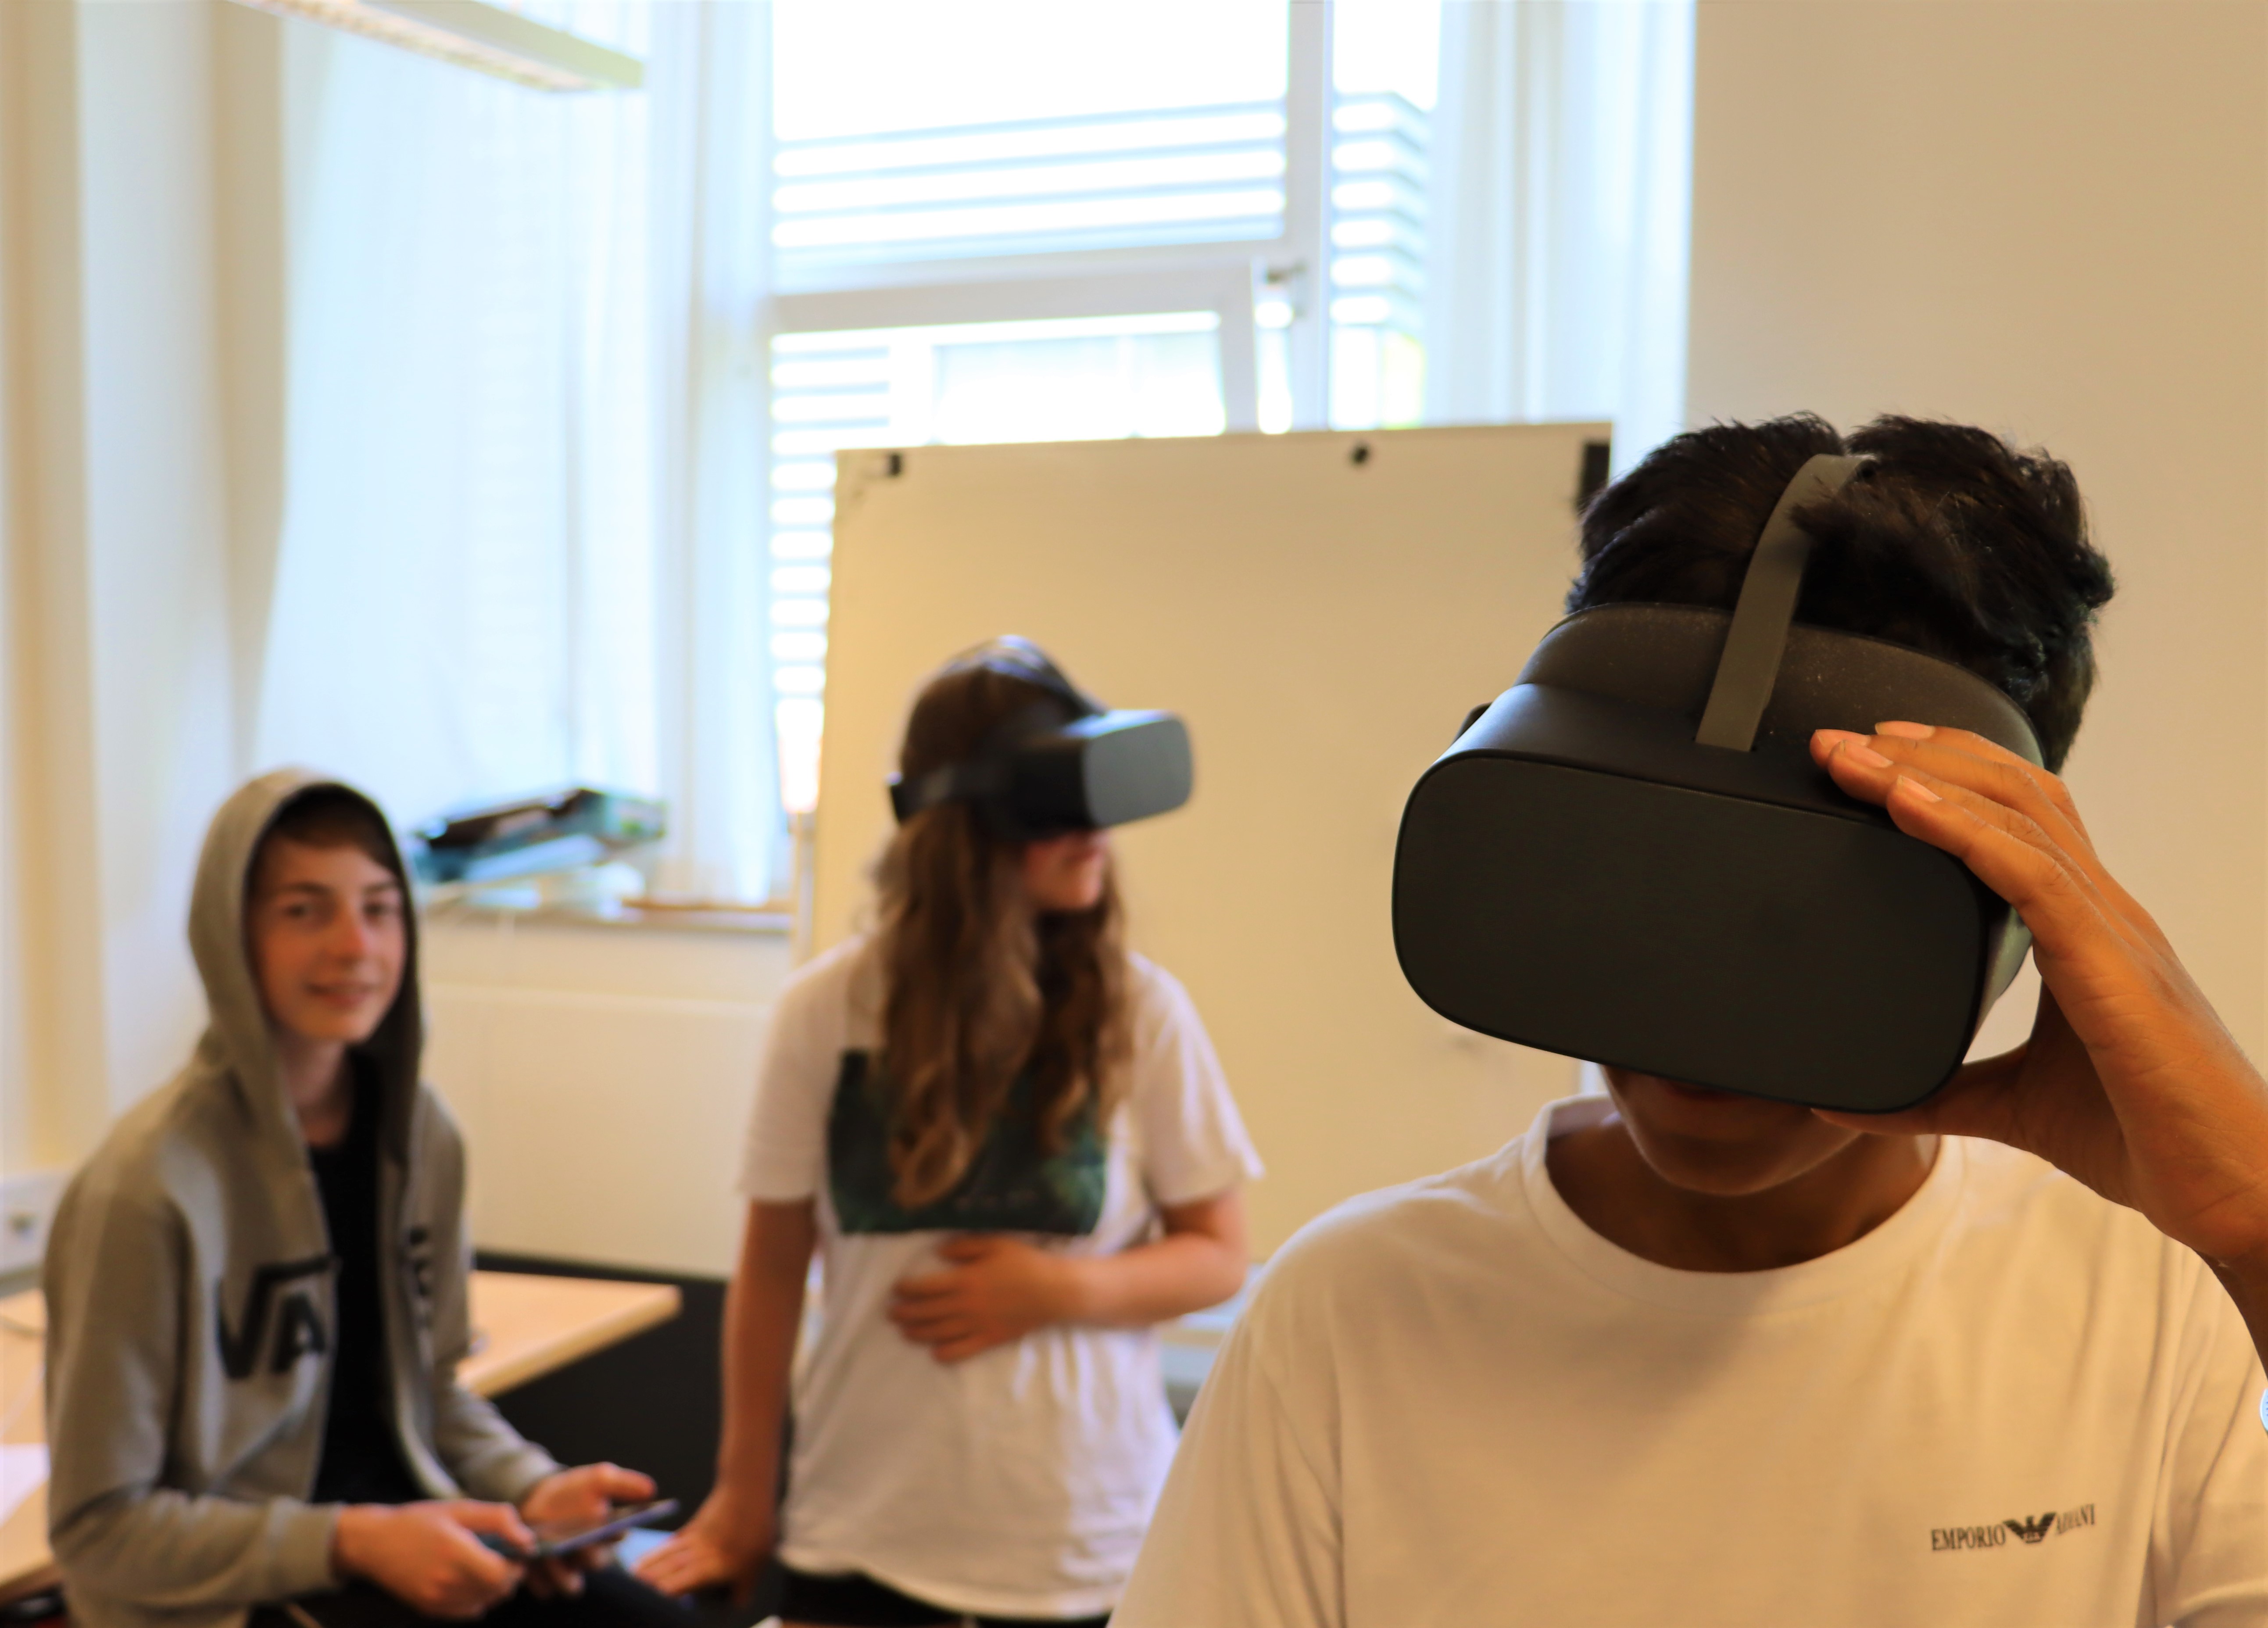 Skole i Gladsaxe virtual reality mod mobning Gladsaxe Kommune